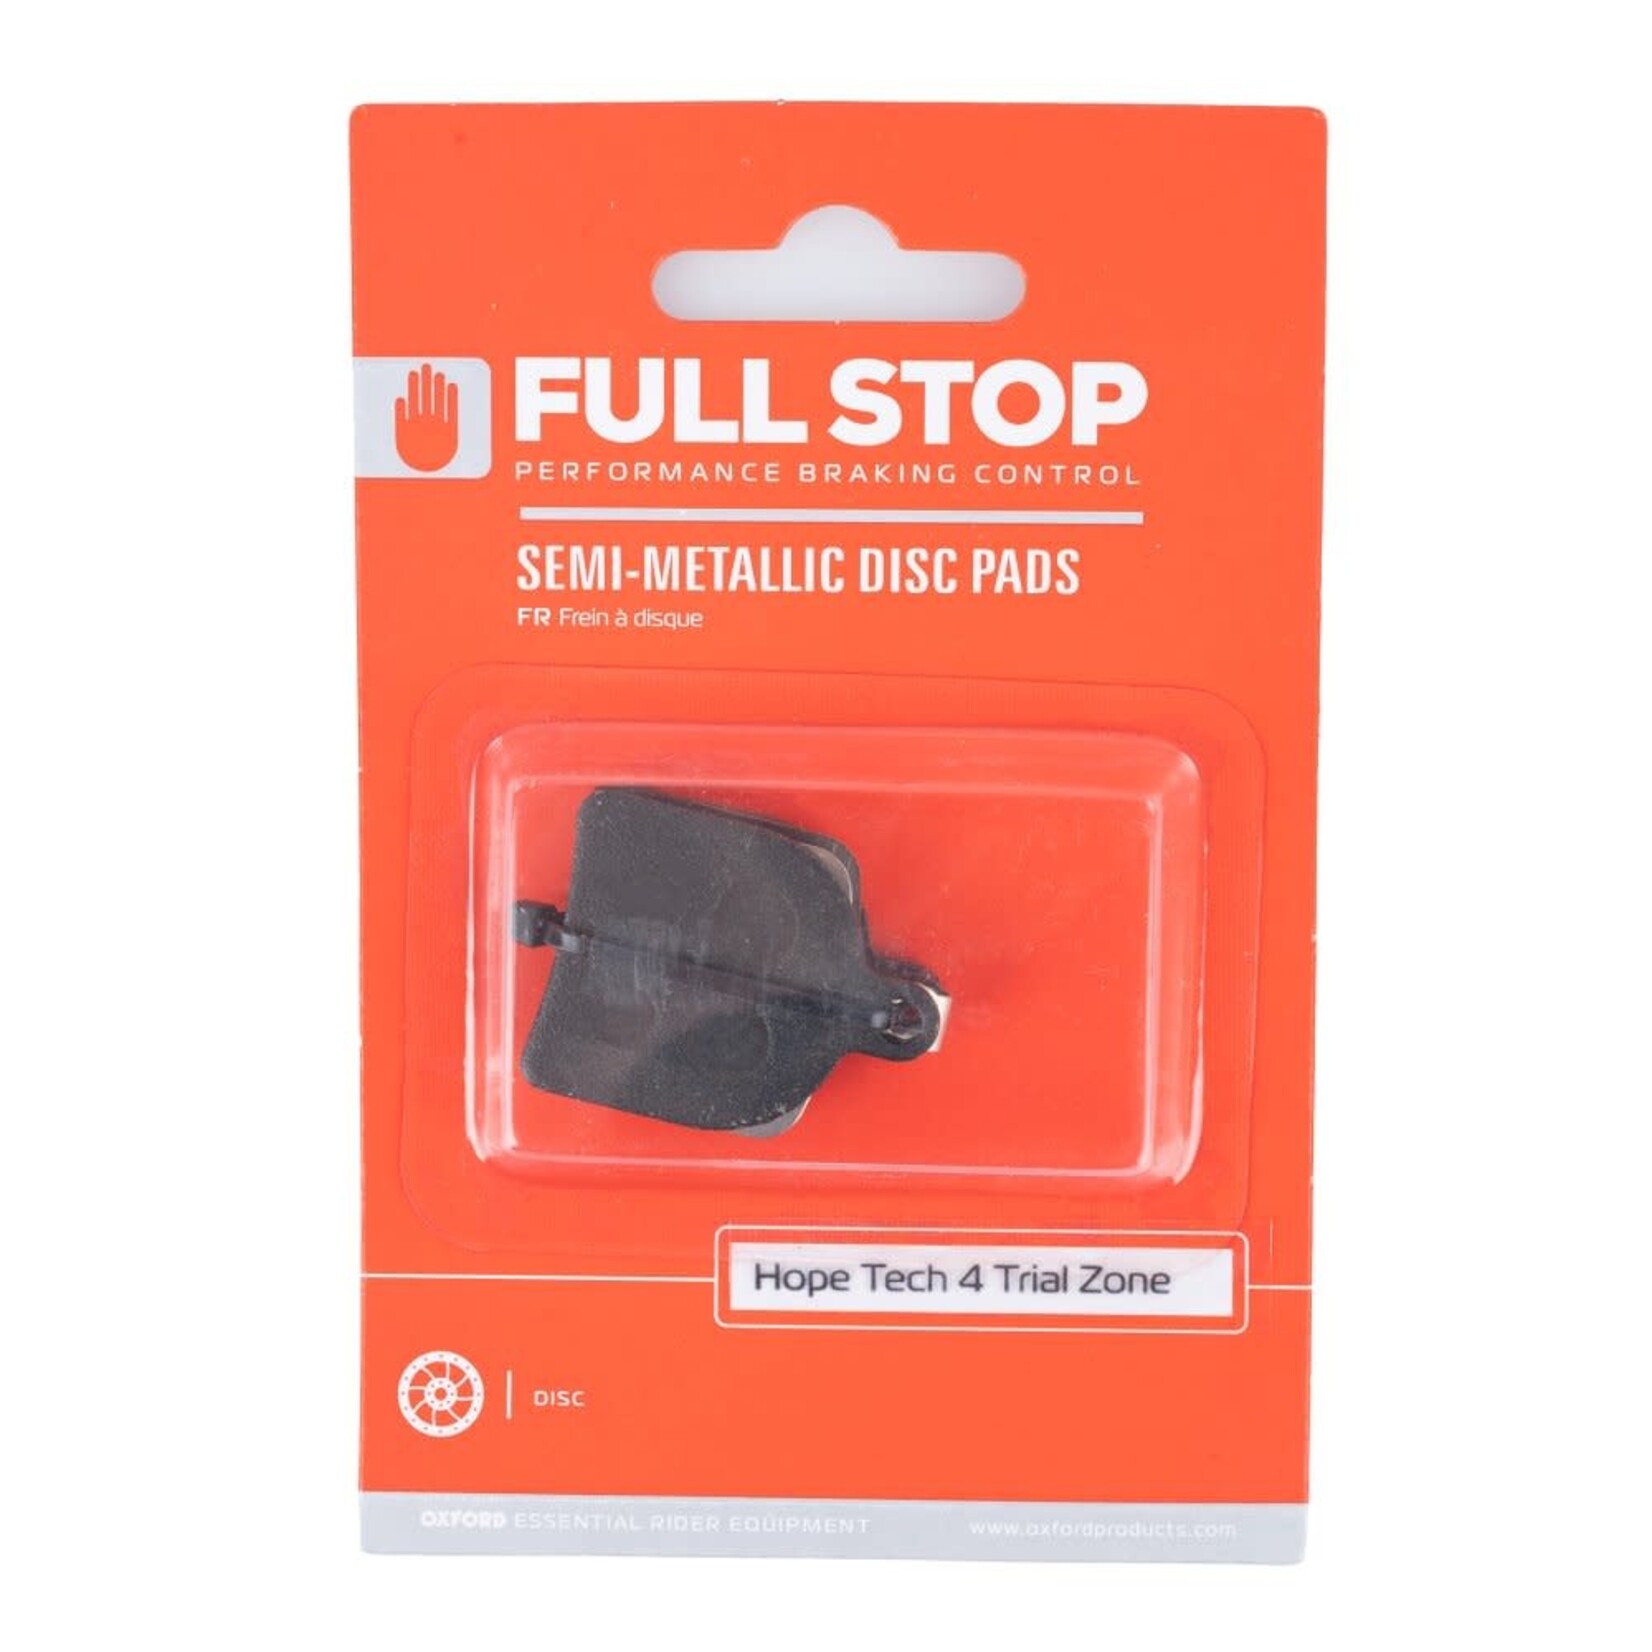 fullstop Fullstop Hope Tech 4 Trial Zone Semi-Metallic Disc Pads